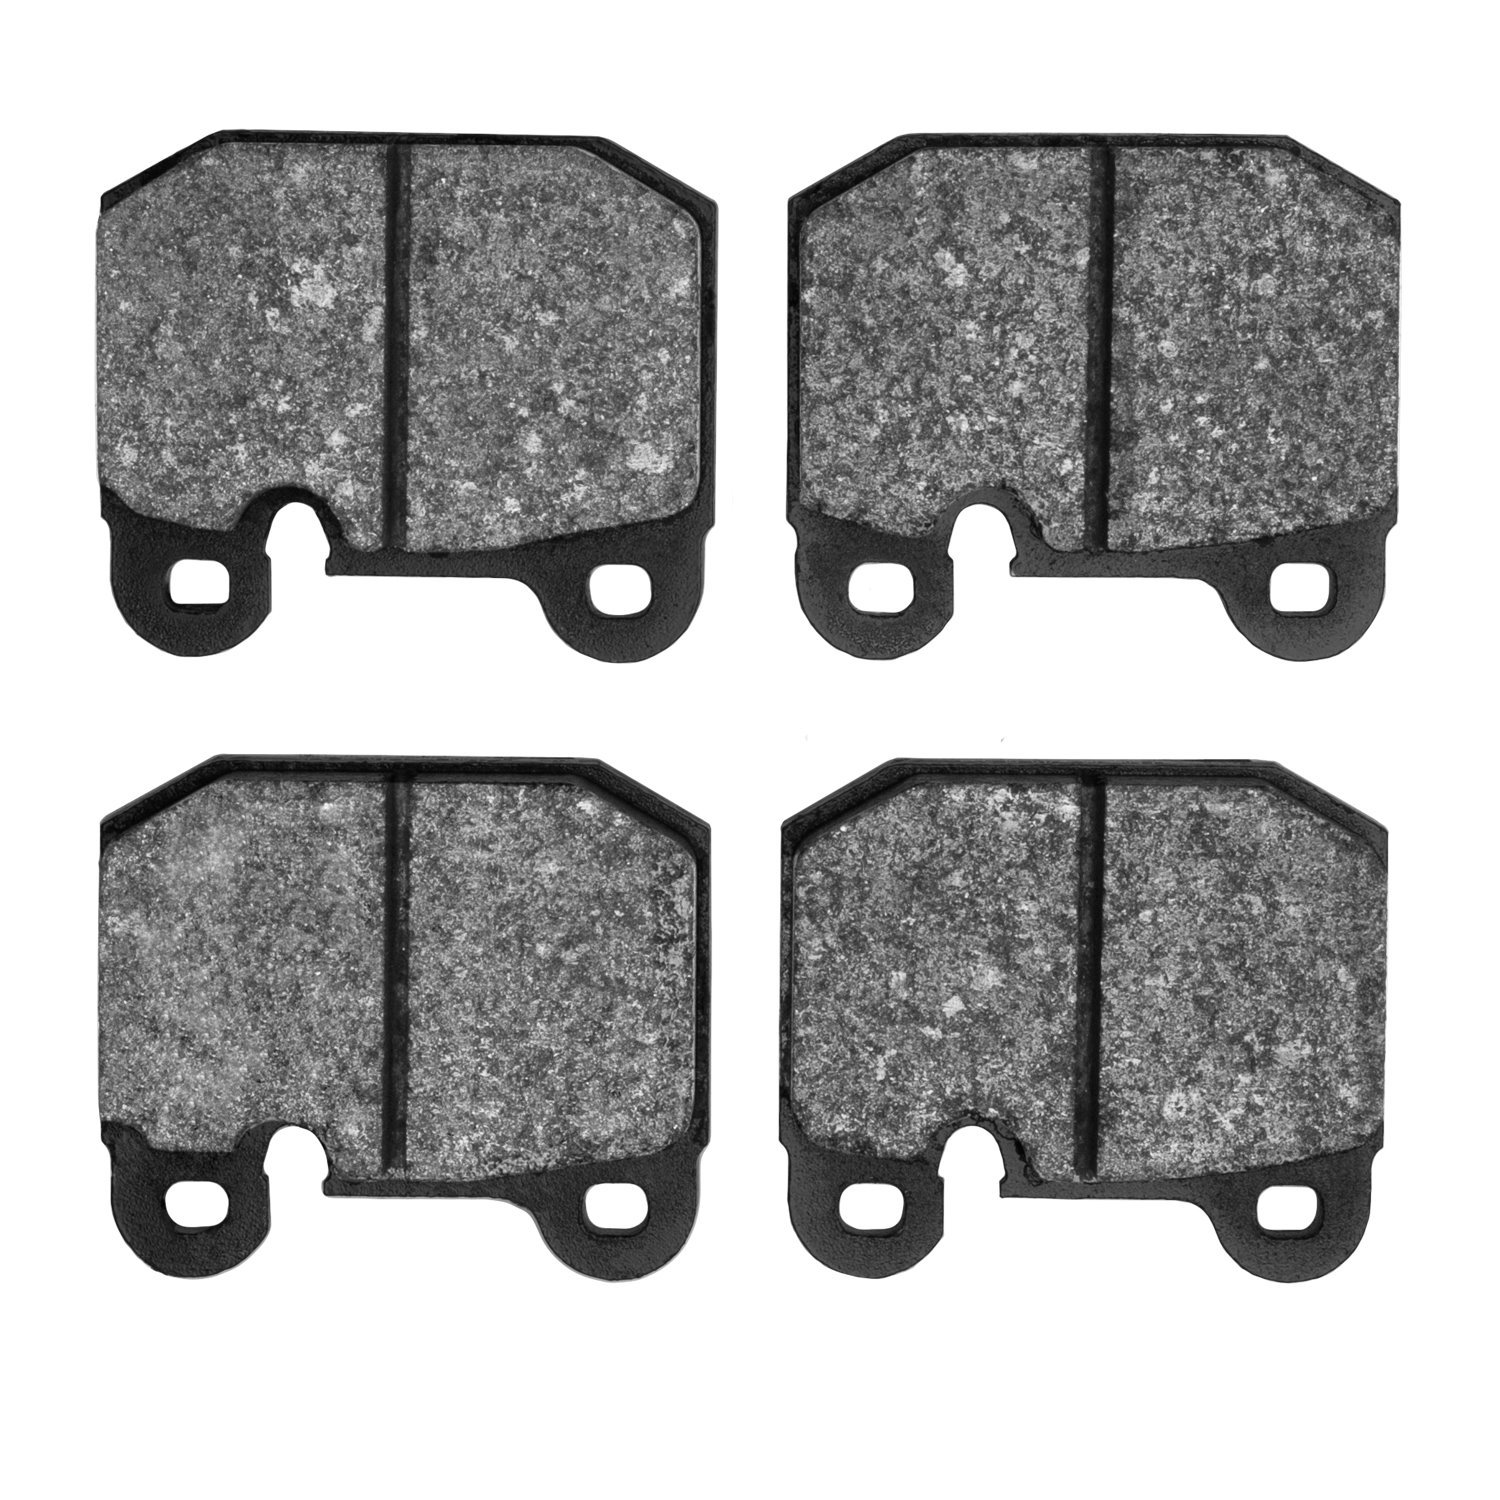 1310-0174-00 3000-Series Ceramic Brake Pads, 1974-2011 Multiple Makes/Models, Position: Front